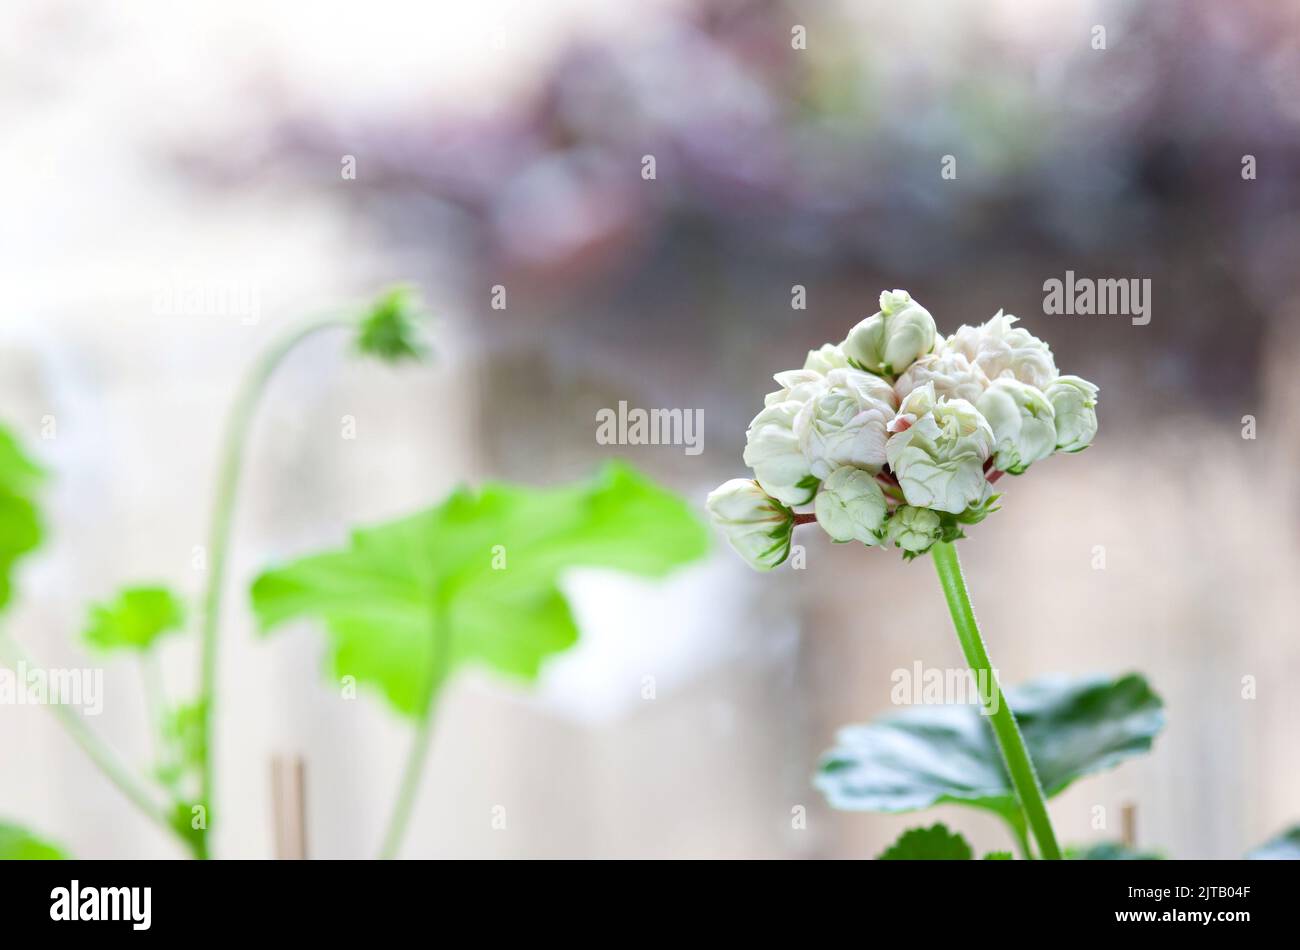 Rosebud white flowers of geraniums varietal or pelargonium. Garden or house plant. Selective focus. Stock Photo